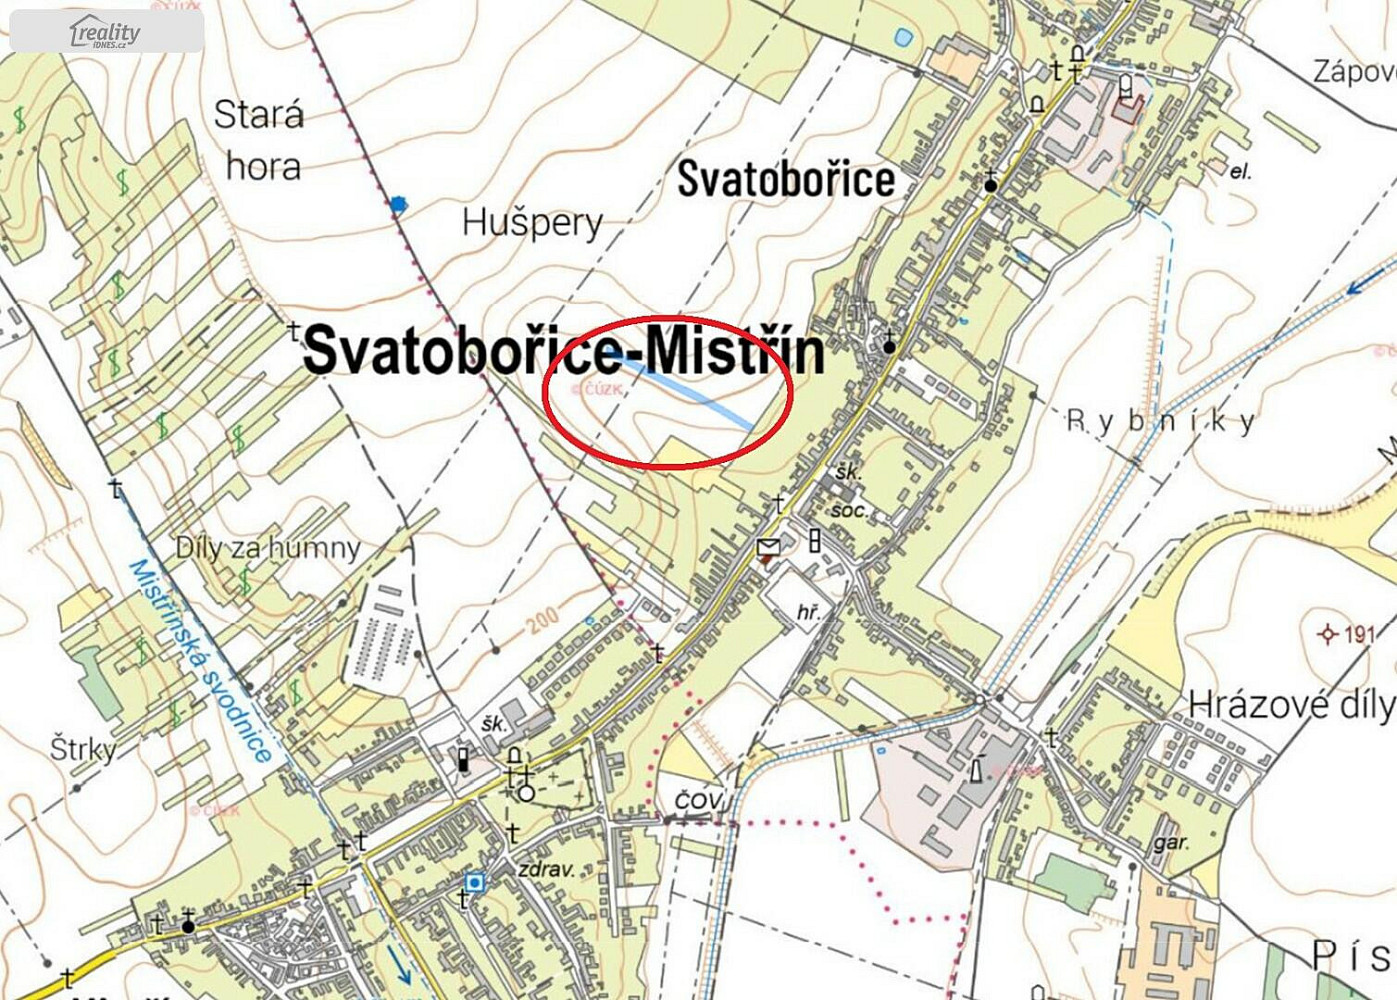 Svatobořice-Mistřín - Svatobořice, okres Hodonín